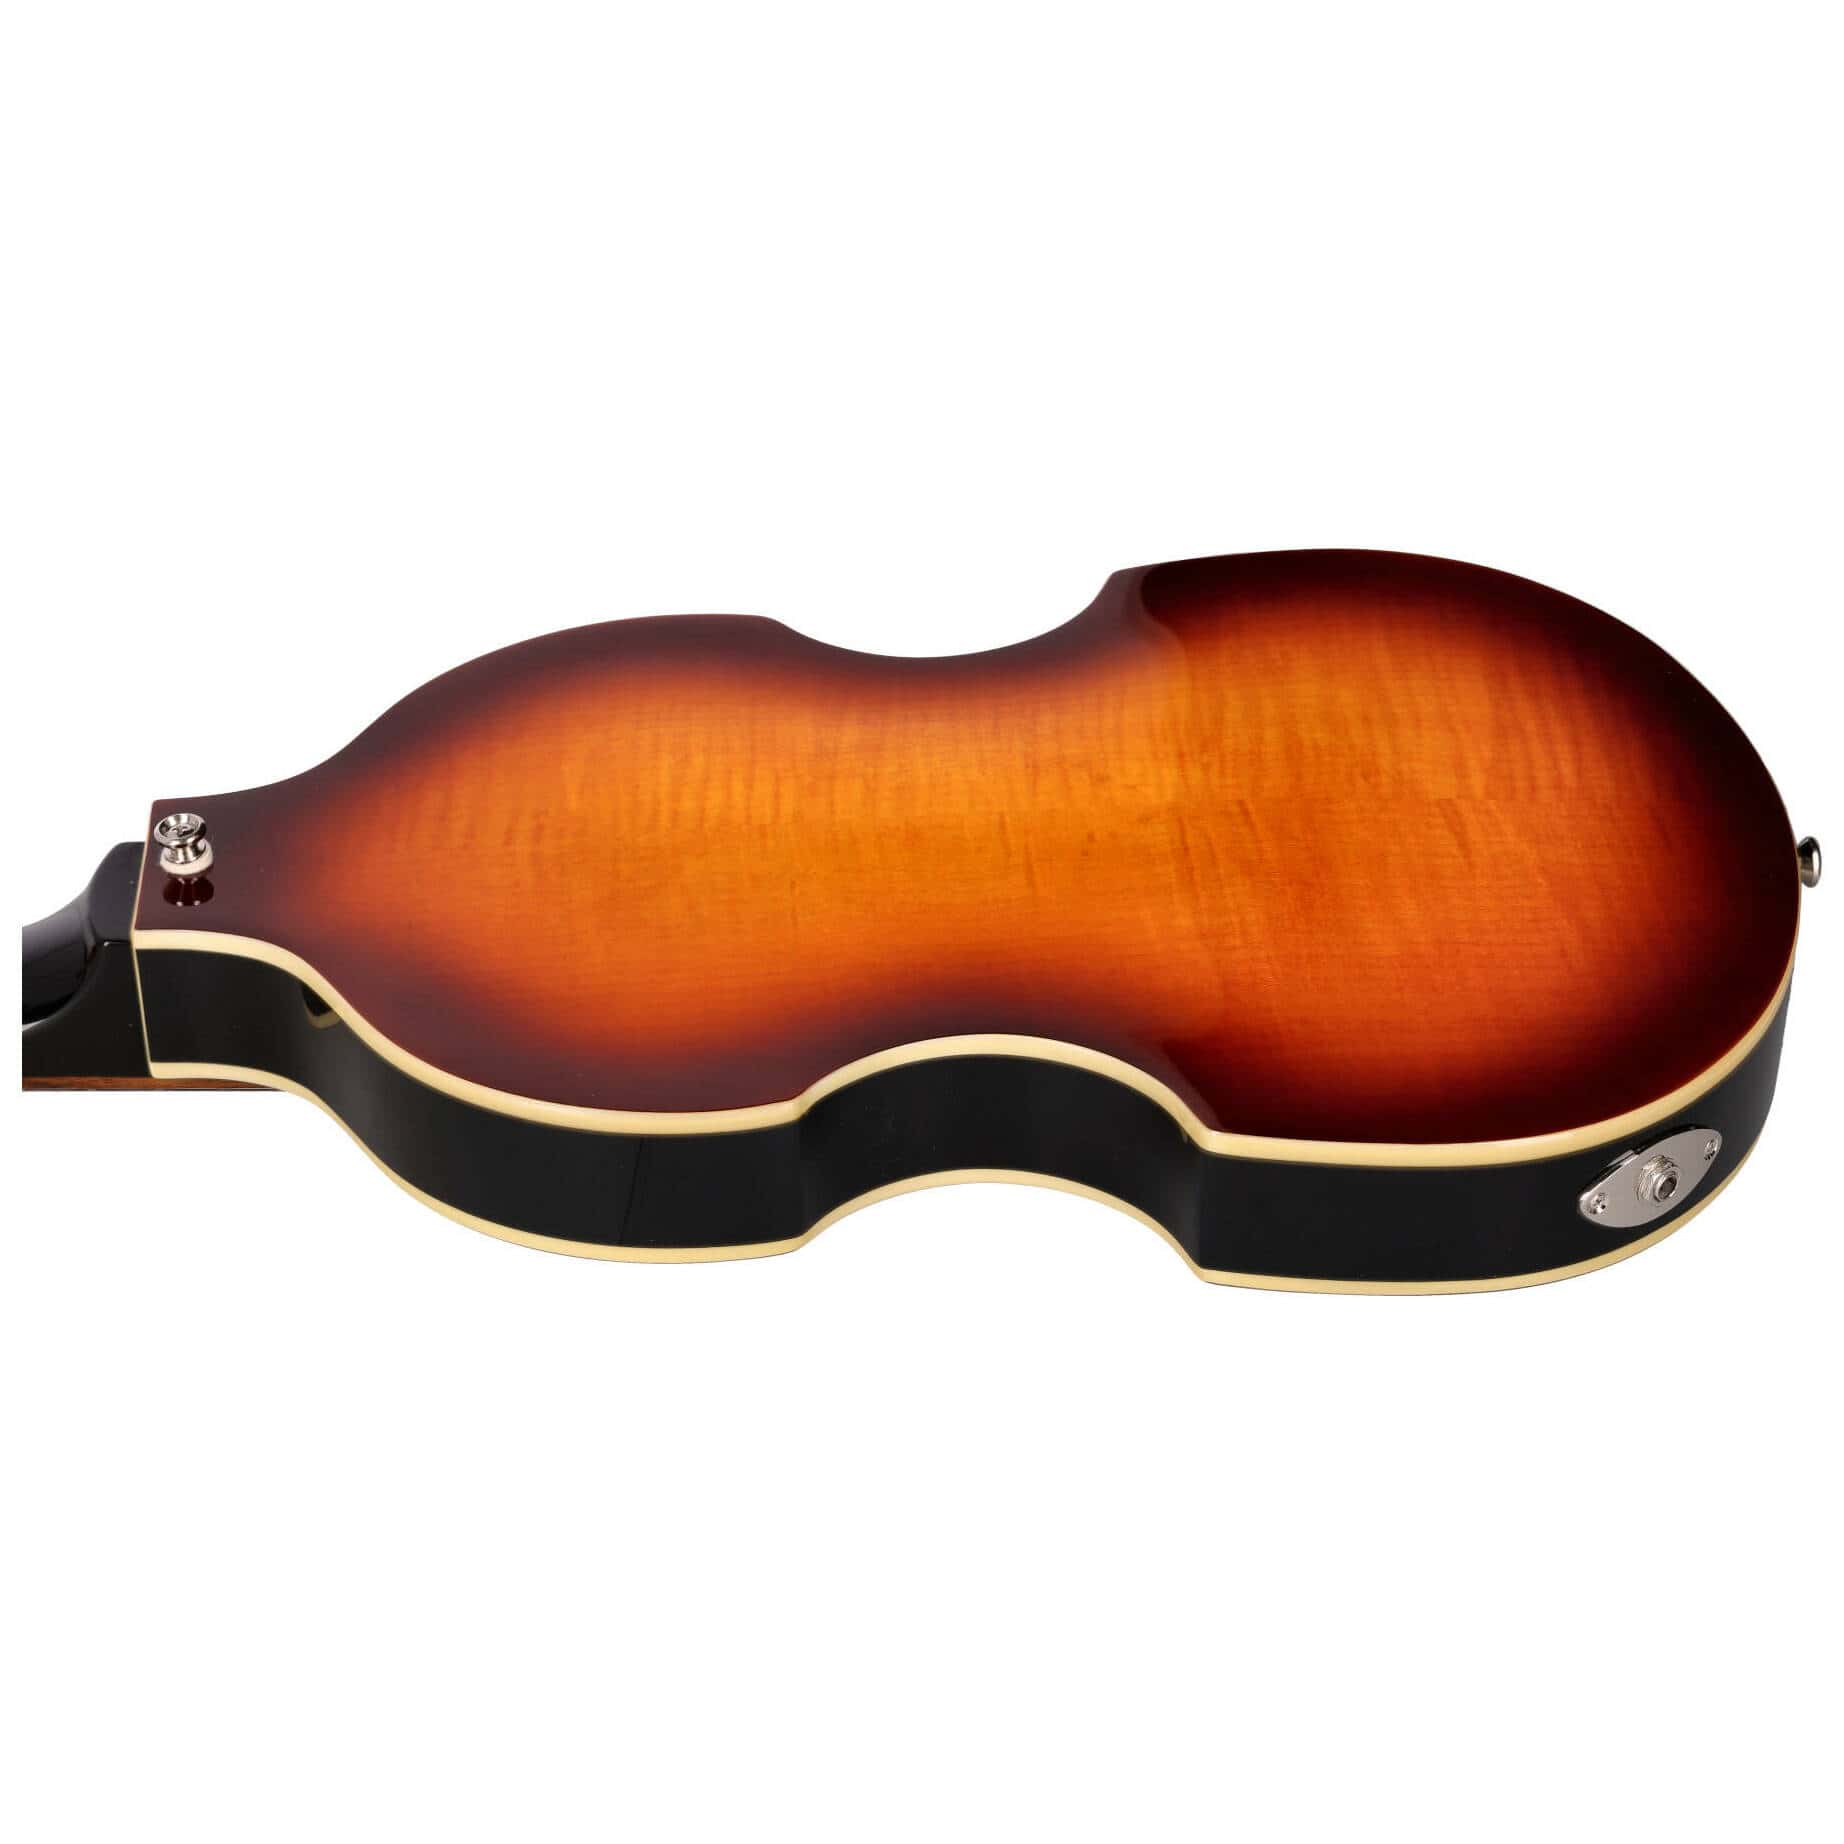 Epiphone Viola Bass VS 12